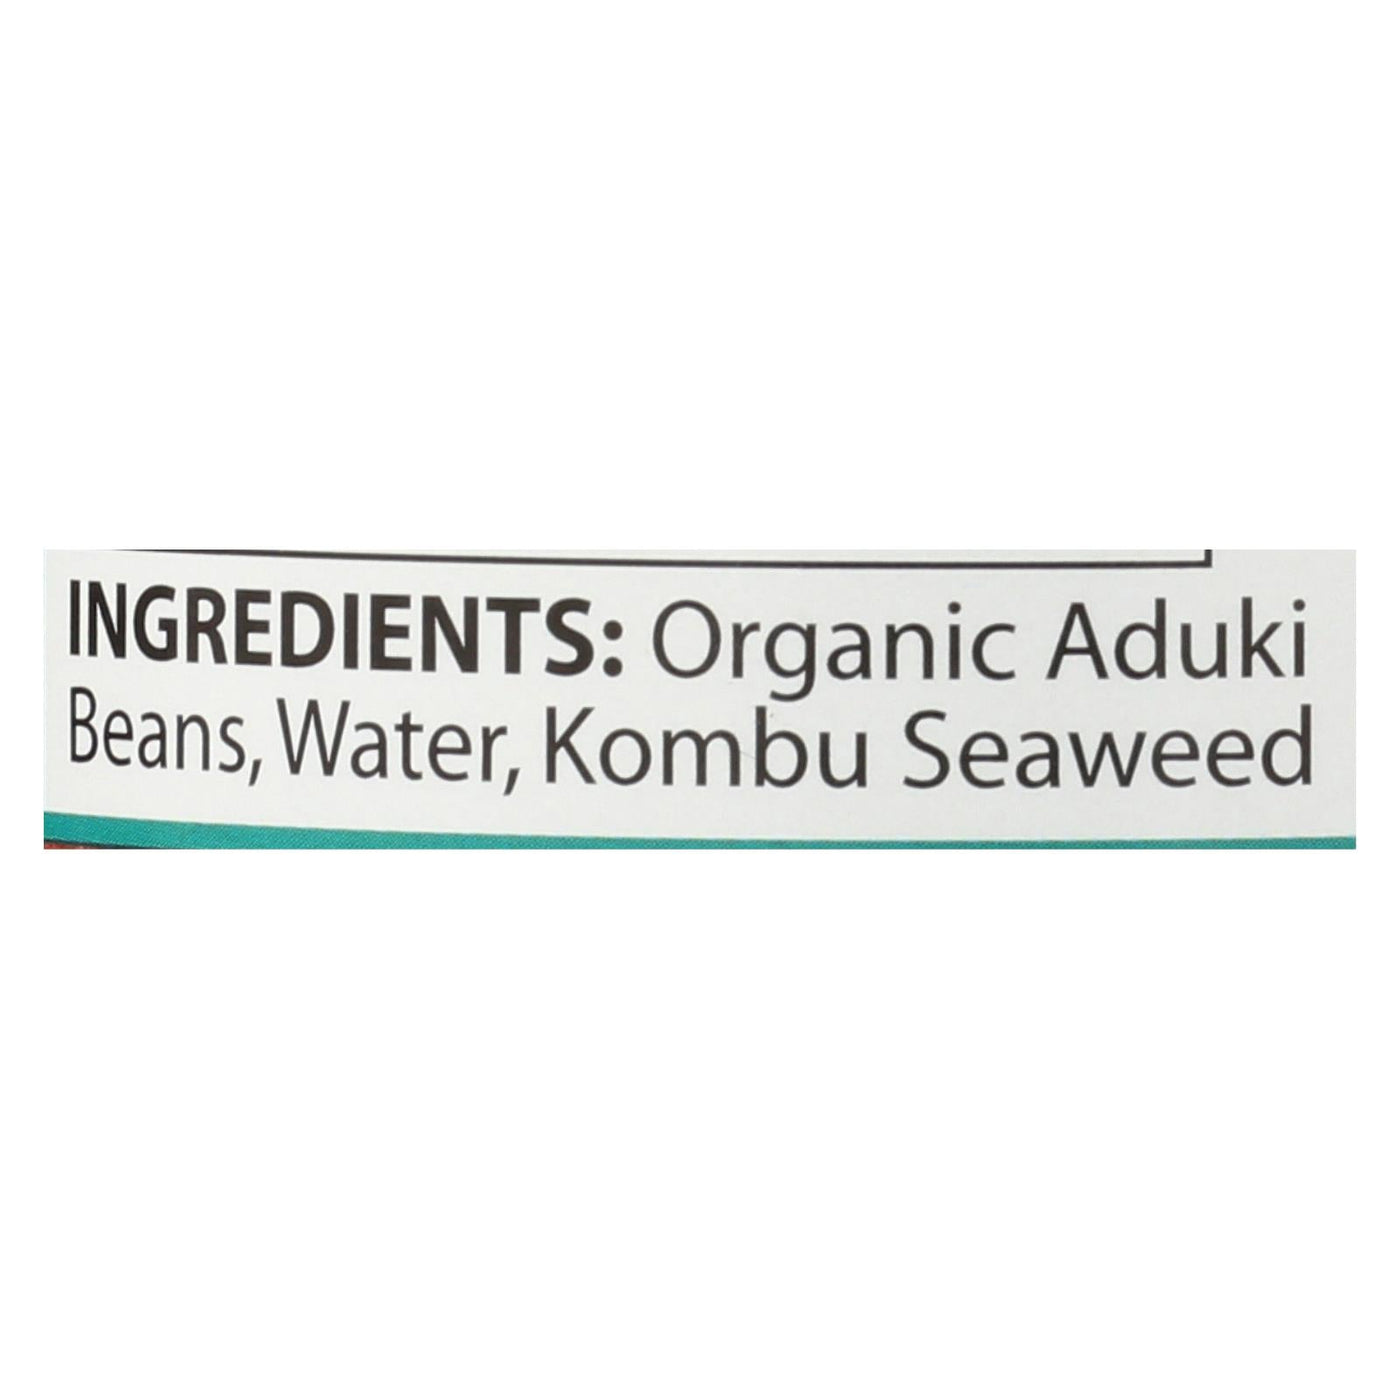 Eden Foods Organic Aduki Beans - Case Of 12 - 15 Oz. | OnlyNaturals.us